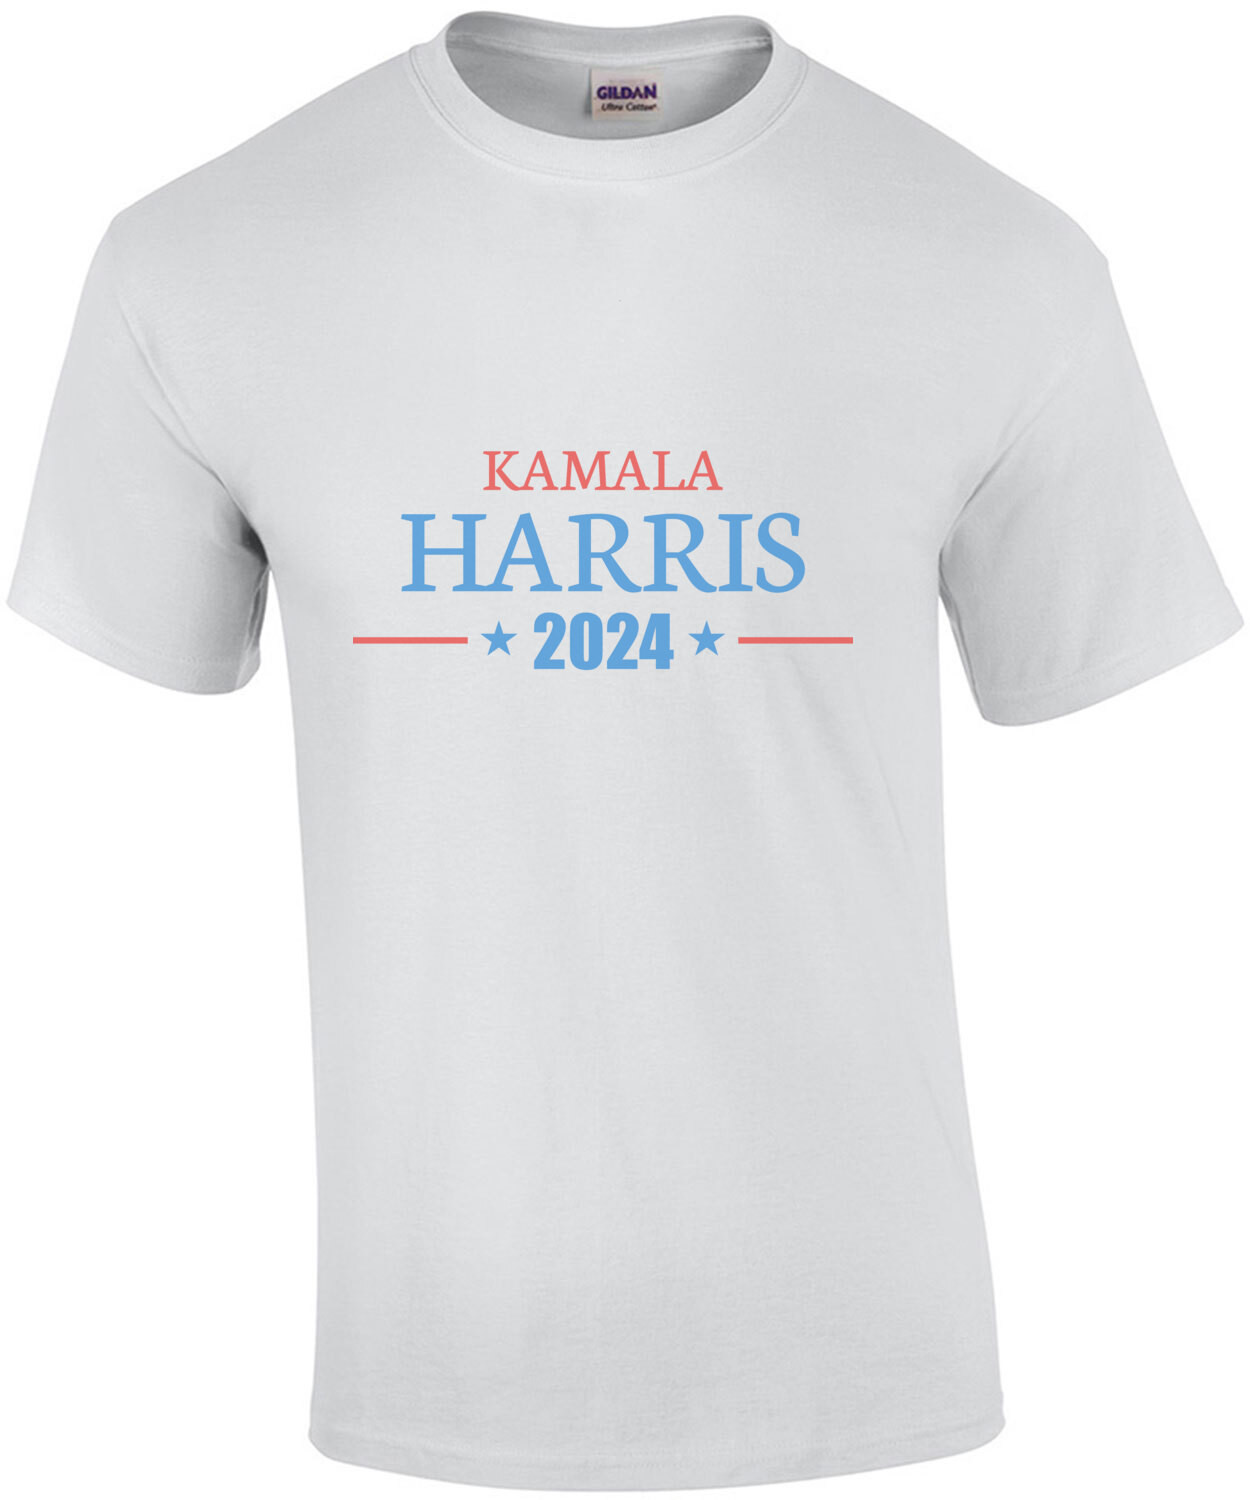 Kamala Harris 2024 - Kamala Harris T-Shirt